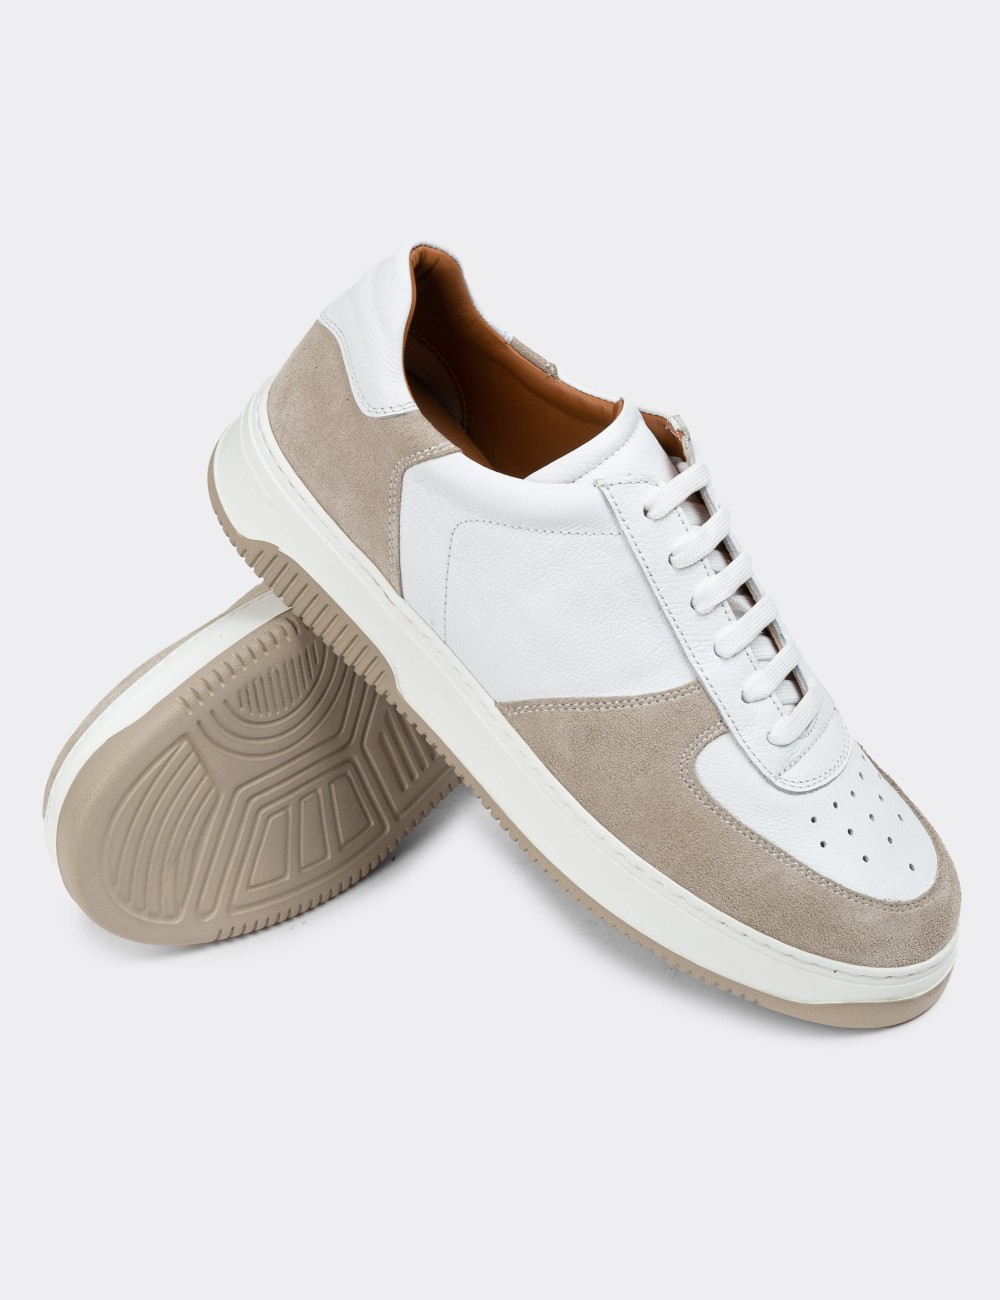 Beige Leather Sneakers - 01965MBEJE01